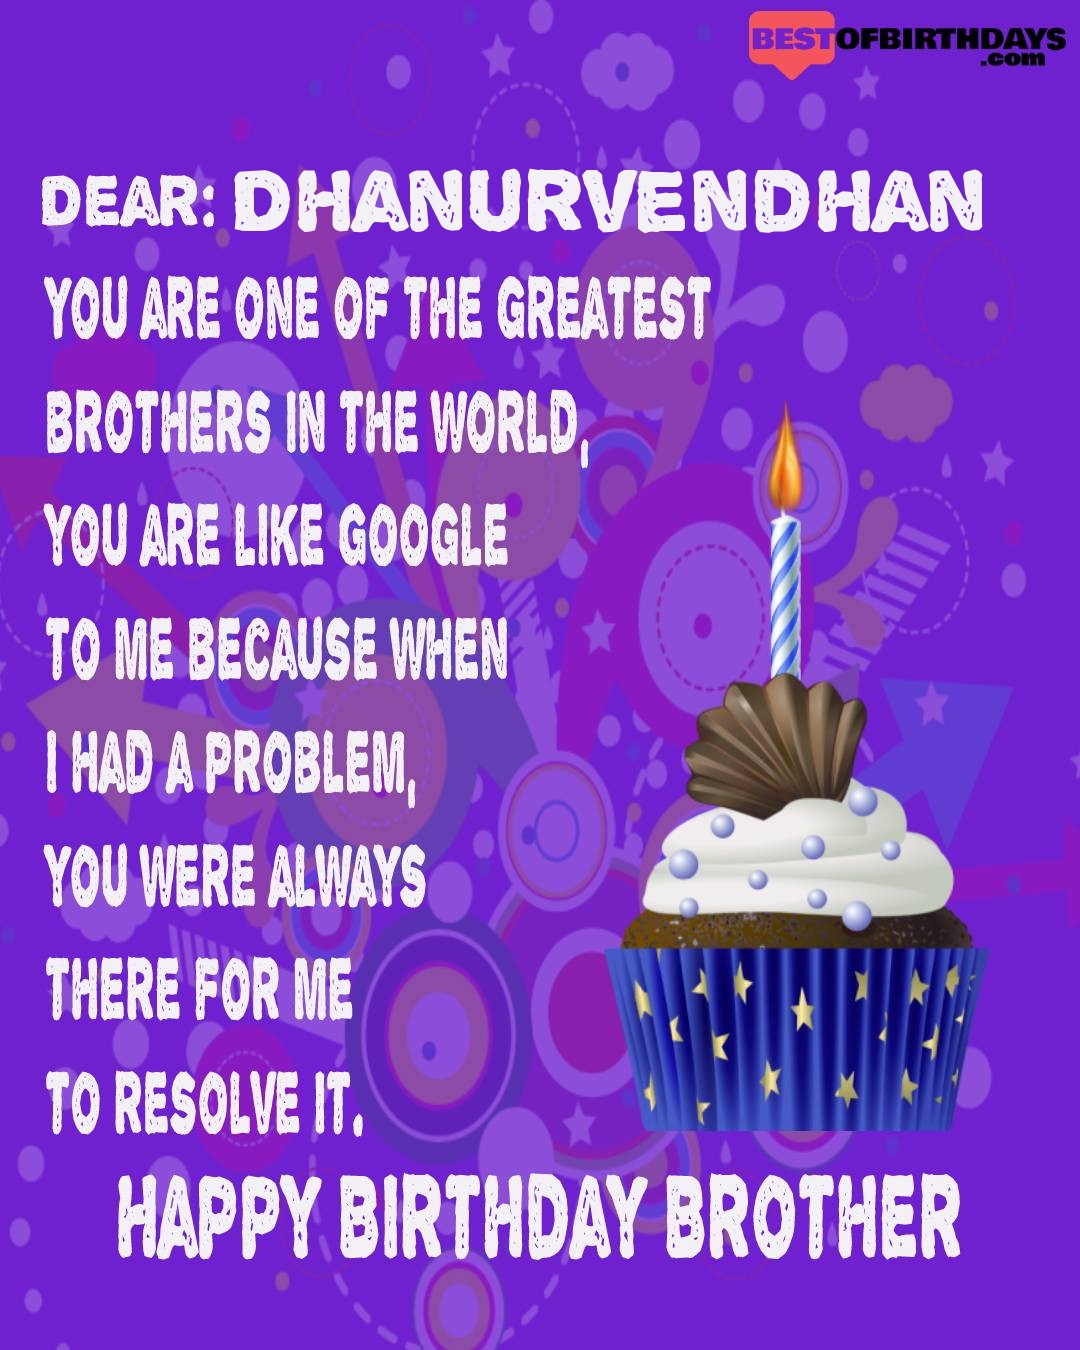 Happy birthday dhanurvendhan bhai brother bro